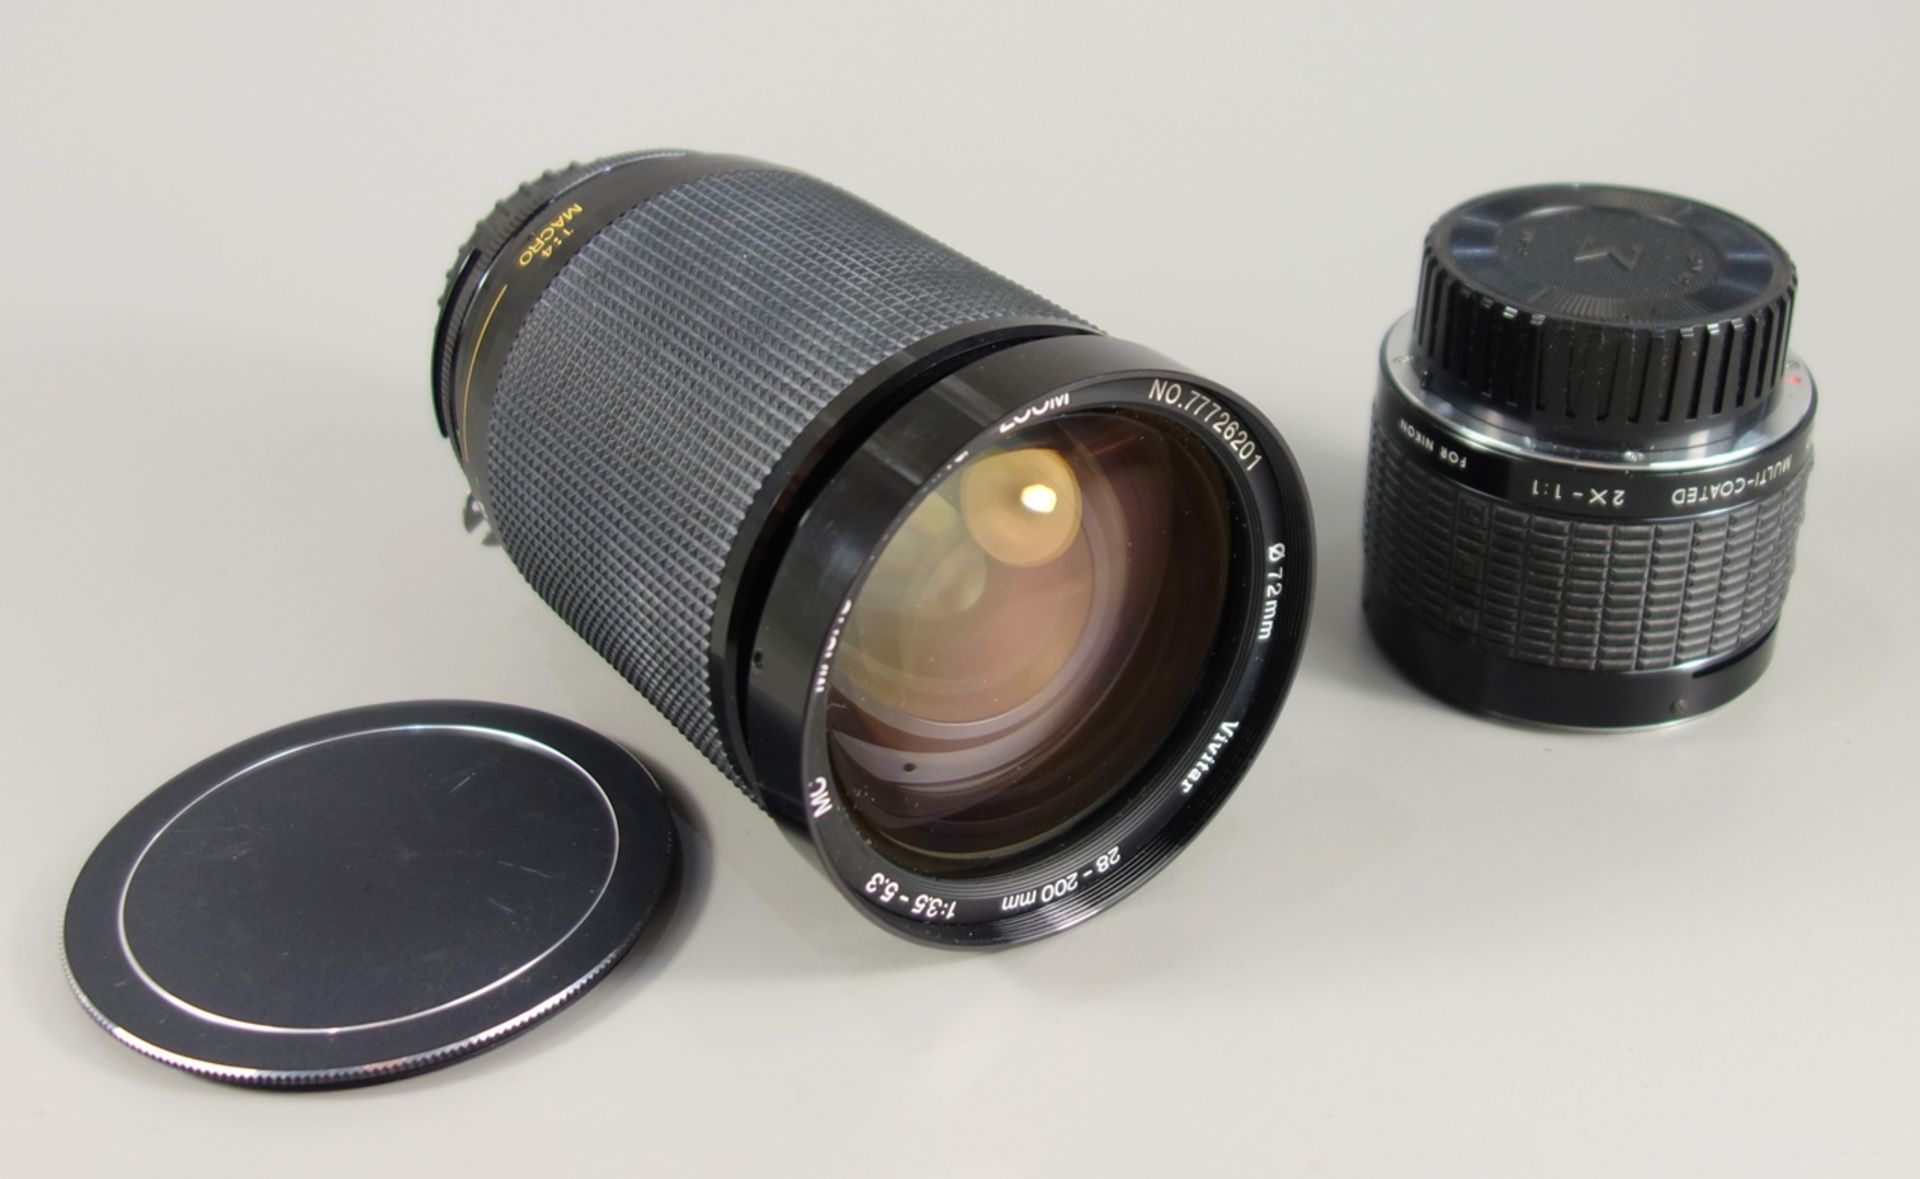 Vivitar Macro Focusing Zoom 1:3,5-5,3/28-200mm, Serien-Nr. 77726201 und Sigma Tele-Macro Multi